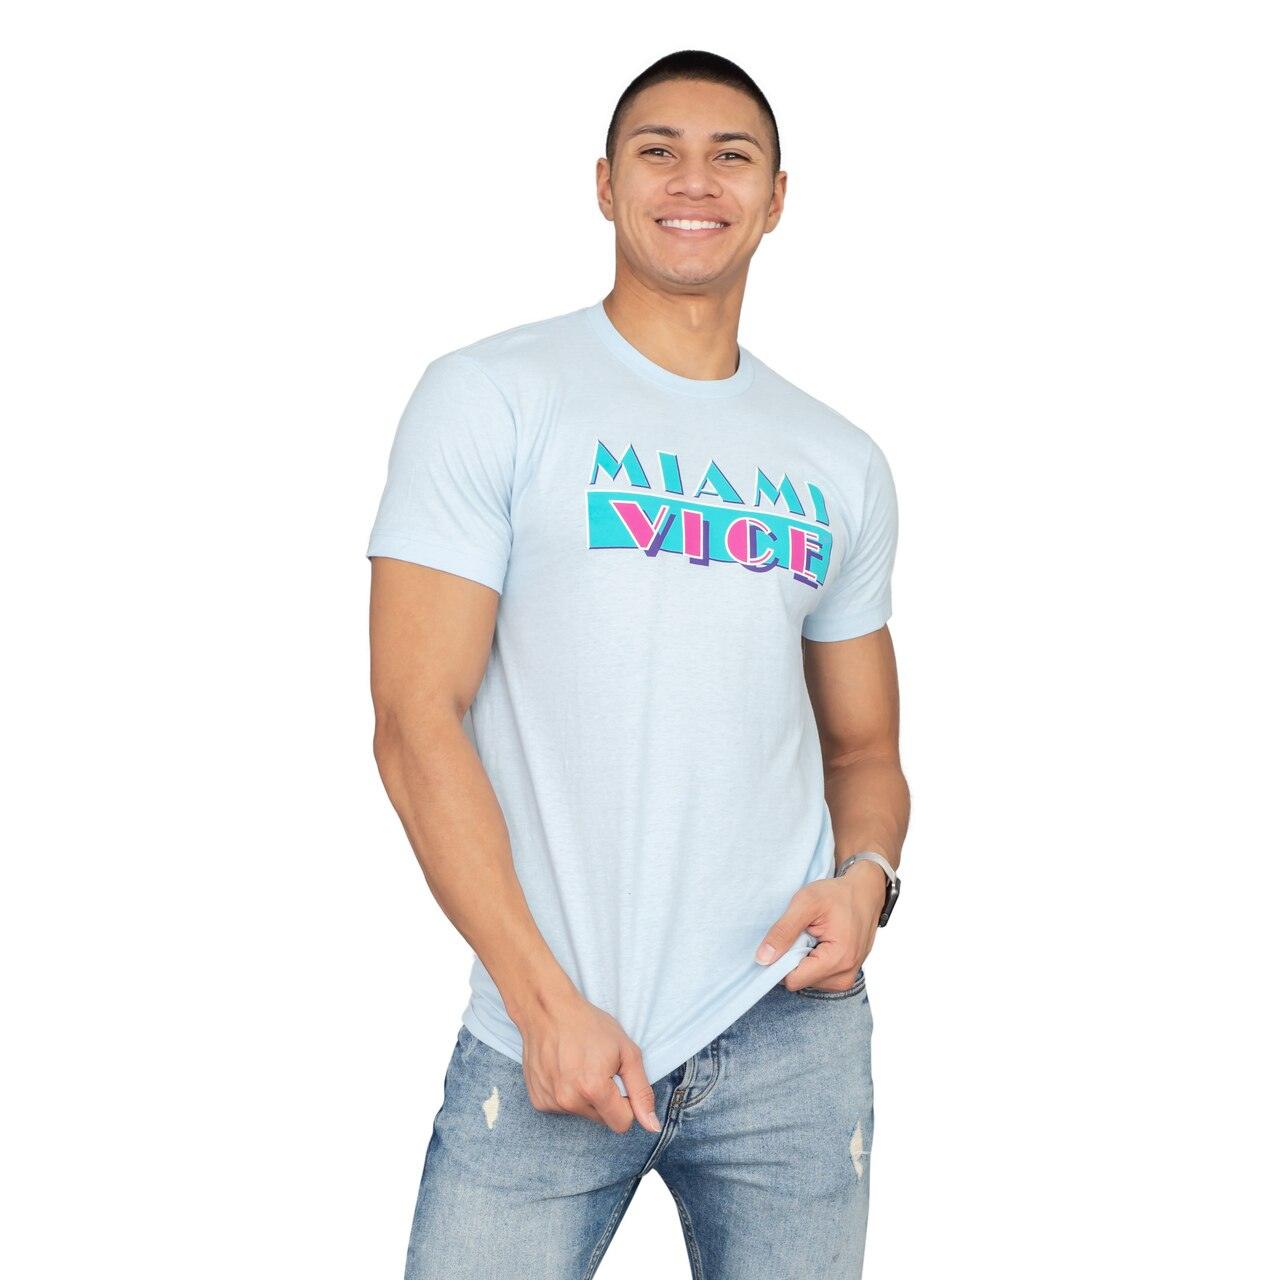 Crockett Miami Vice T-Shirt: Miami Vice Mens T-Shirt